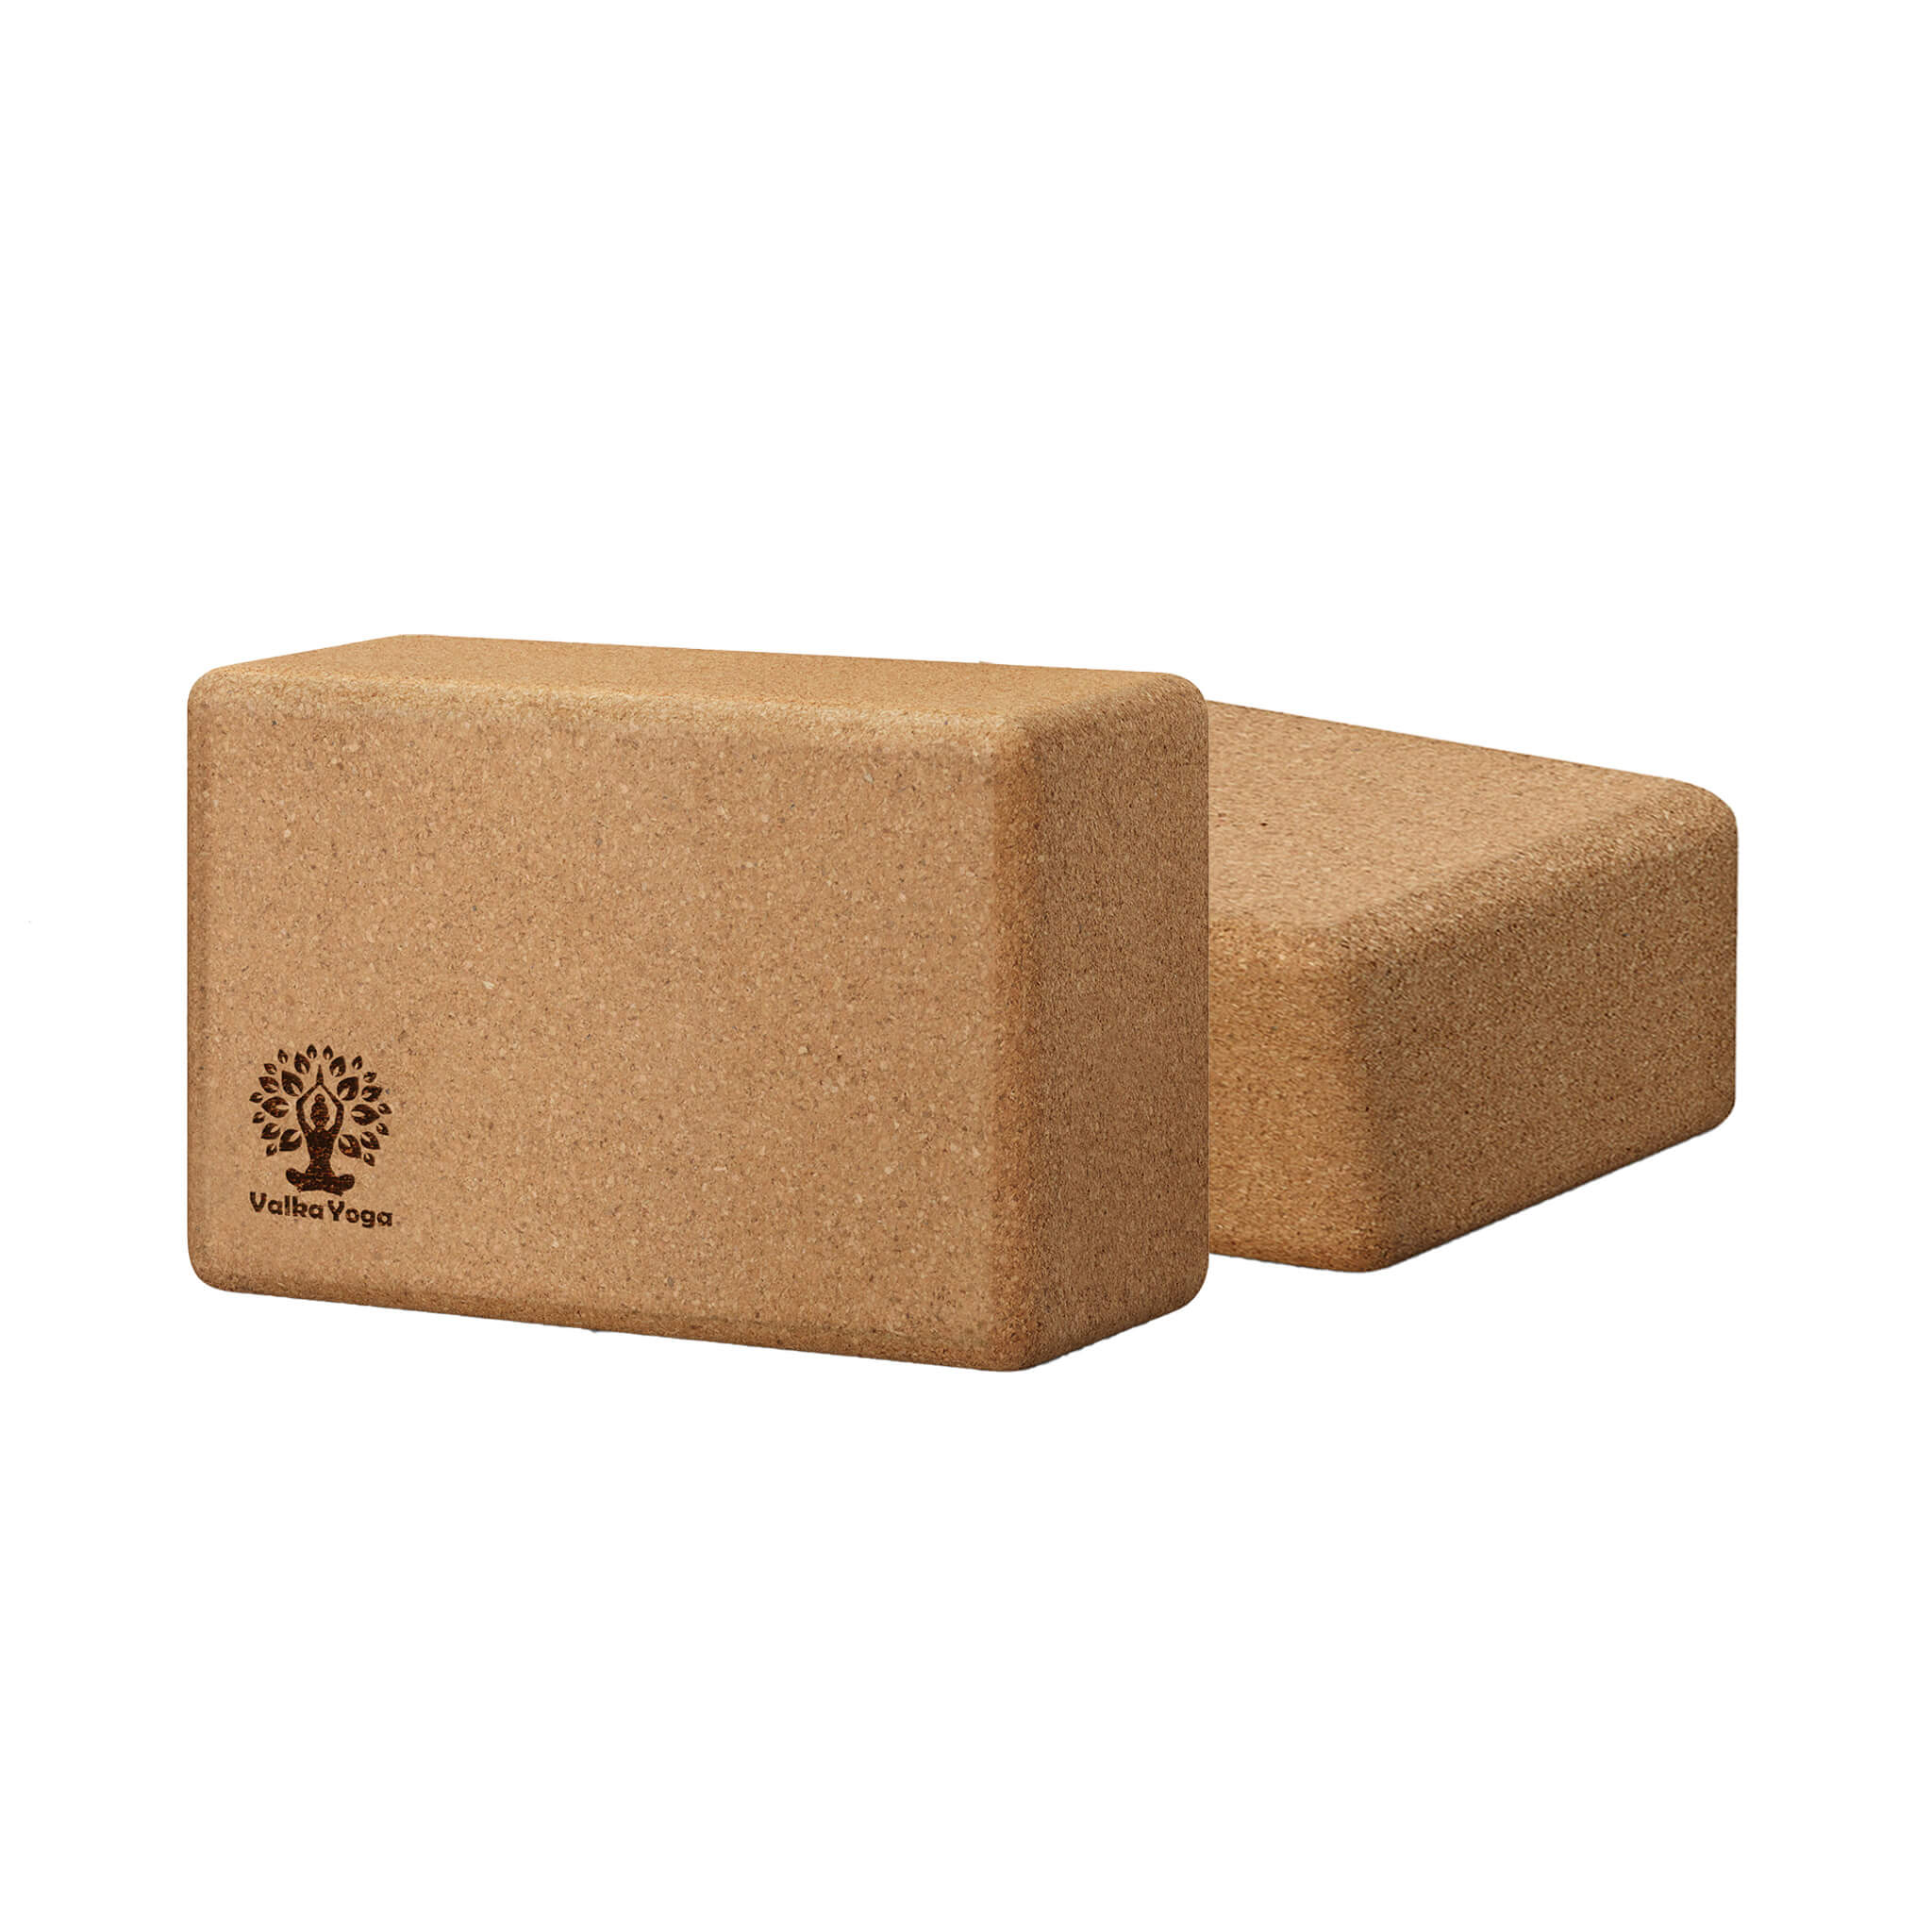 Cork yoga bricks - set of 2